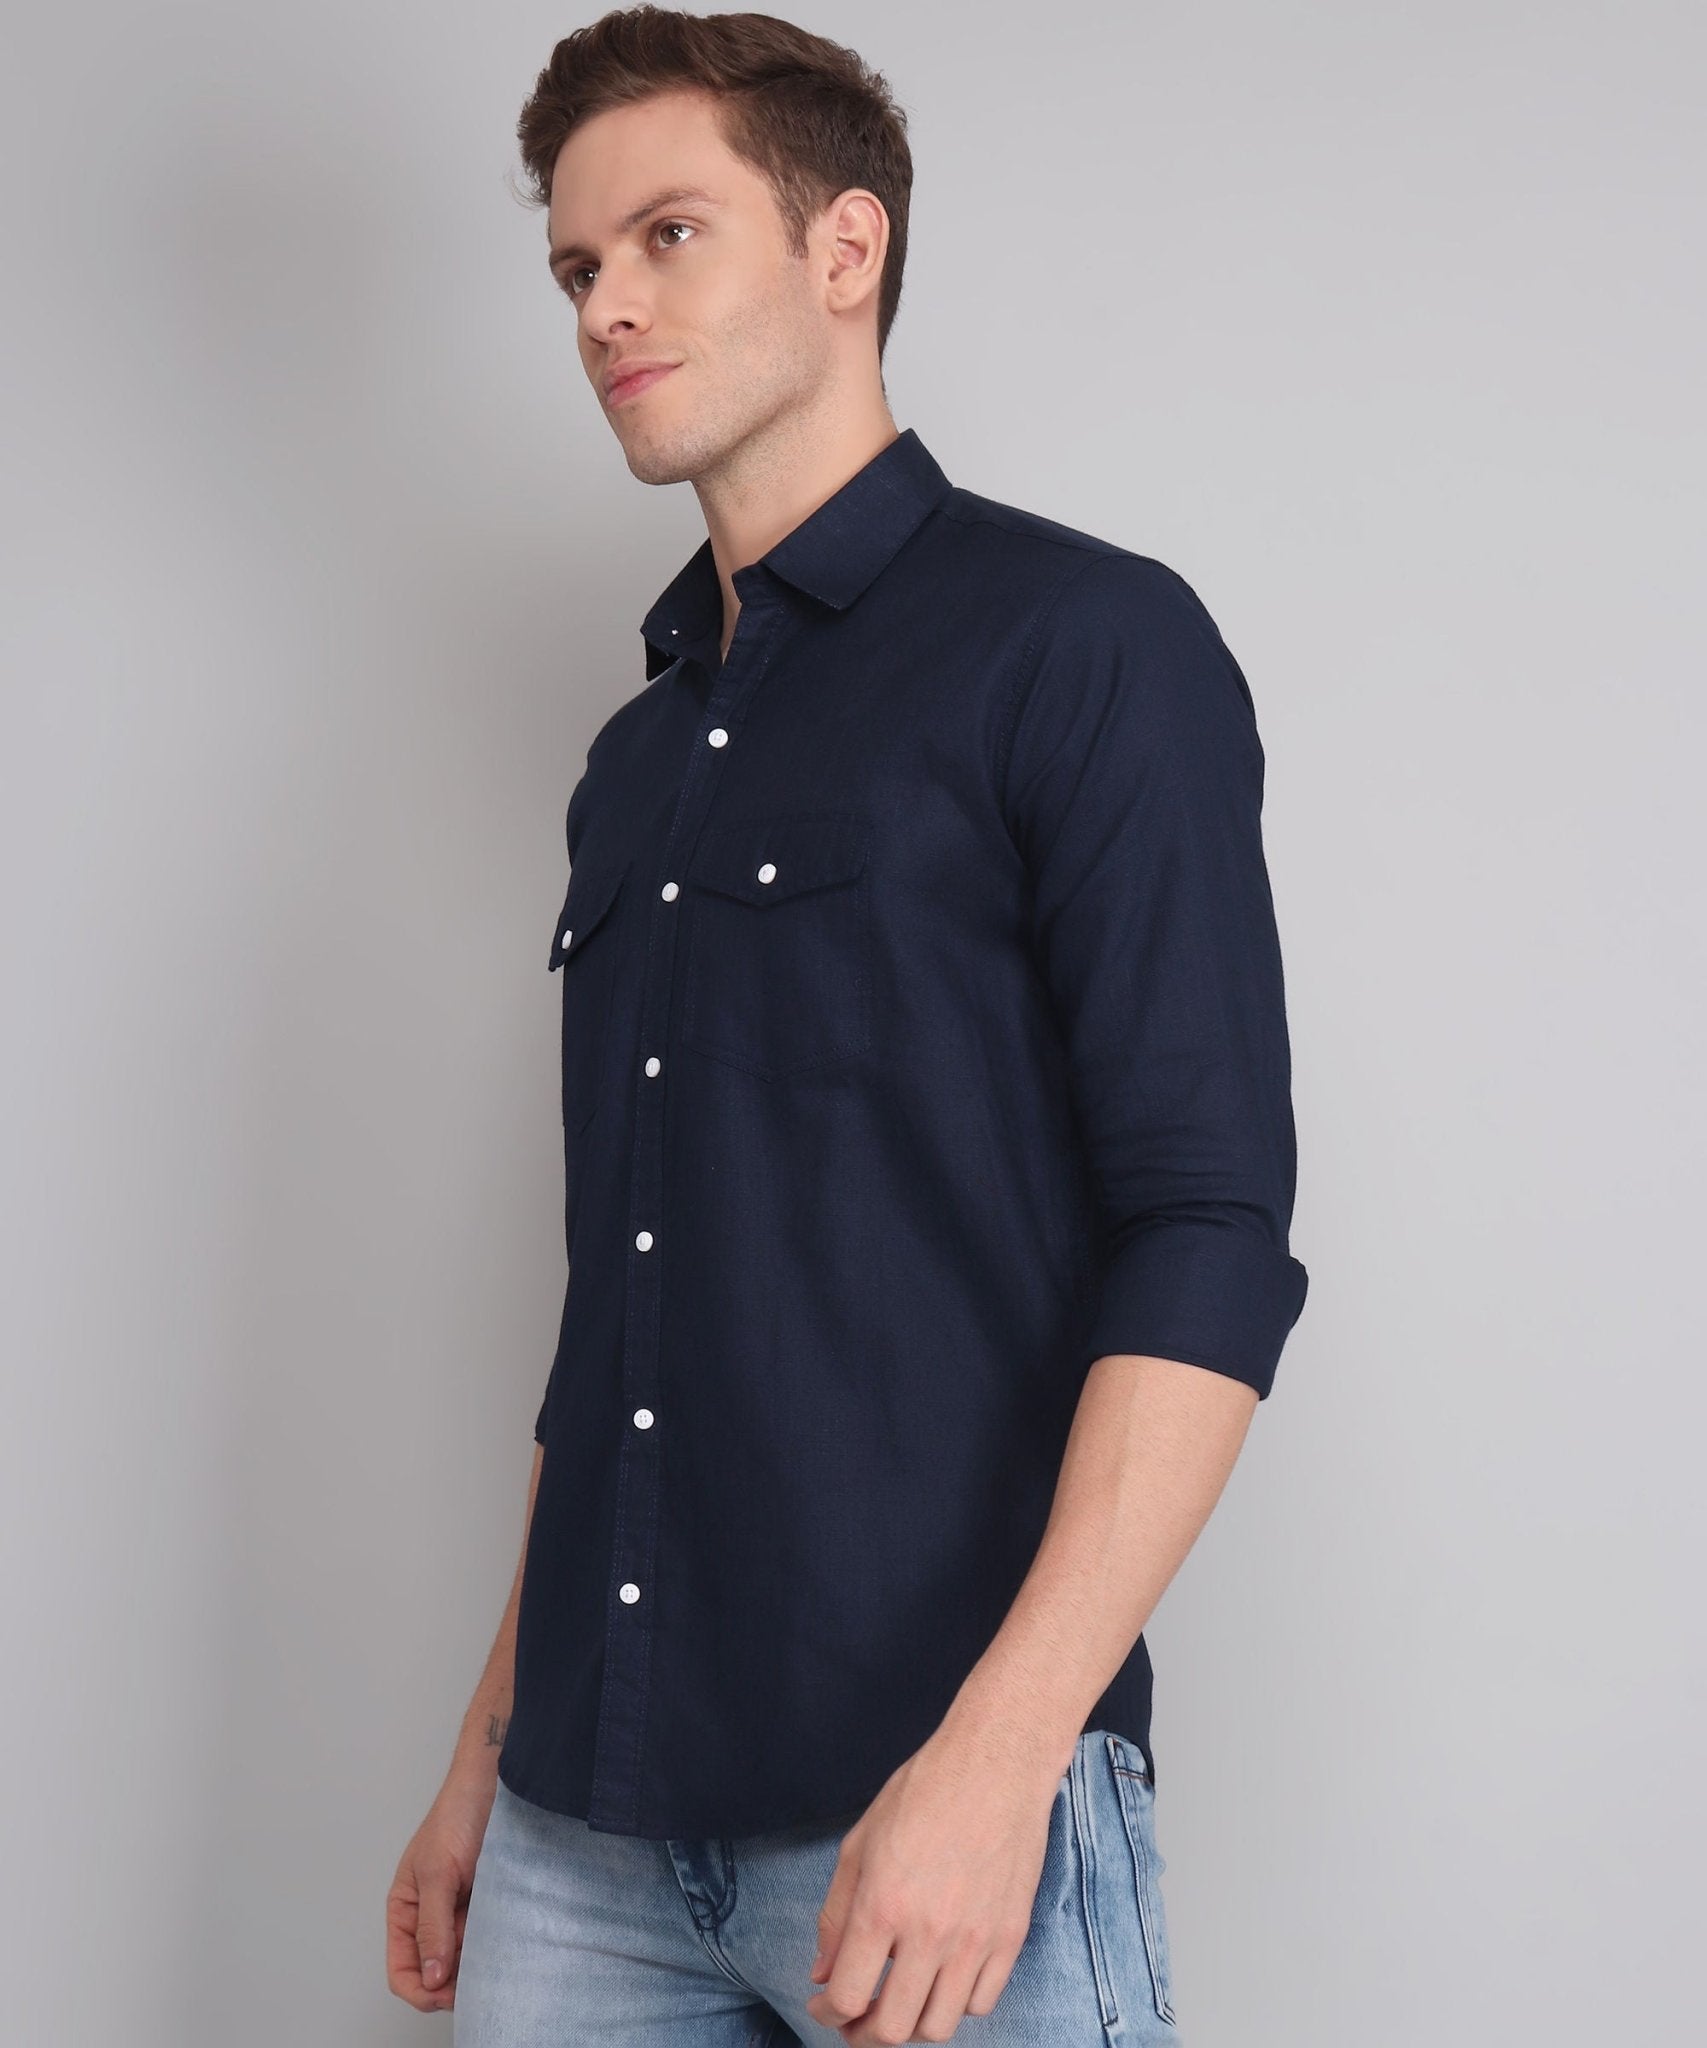 Elite Men's Designer TryBuy Premium Navy Blue Solid Cotton Linen Casual Double Pocket Shirt - TryBuy® USA🇺🇸